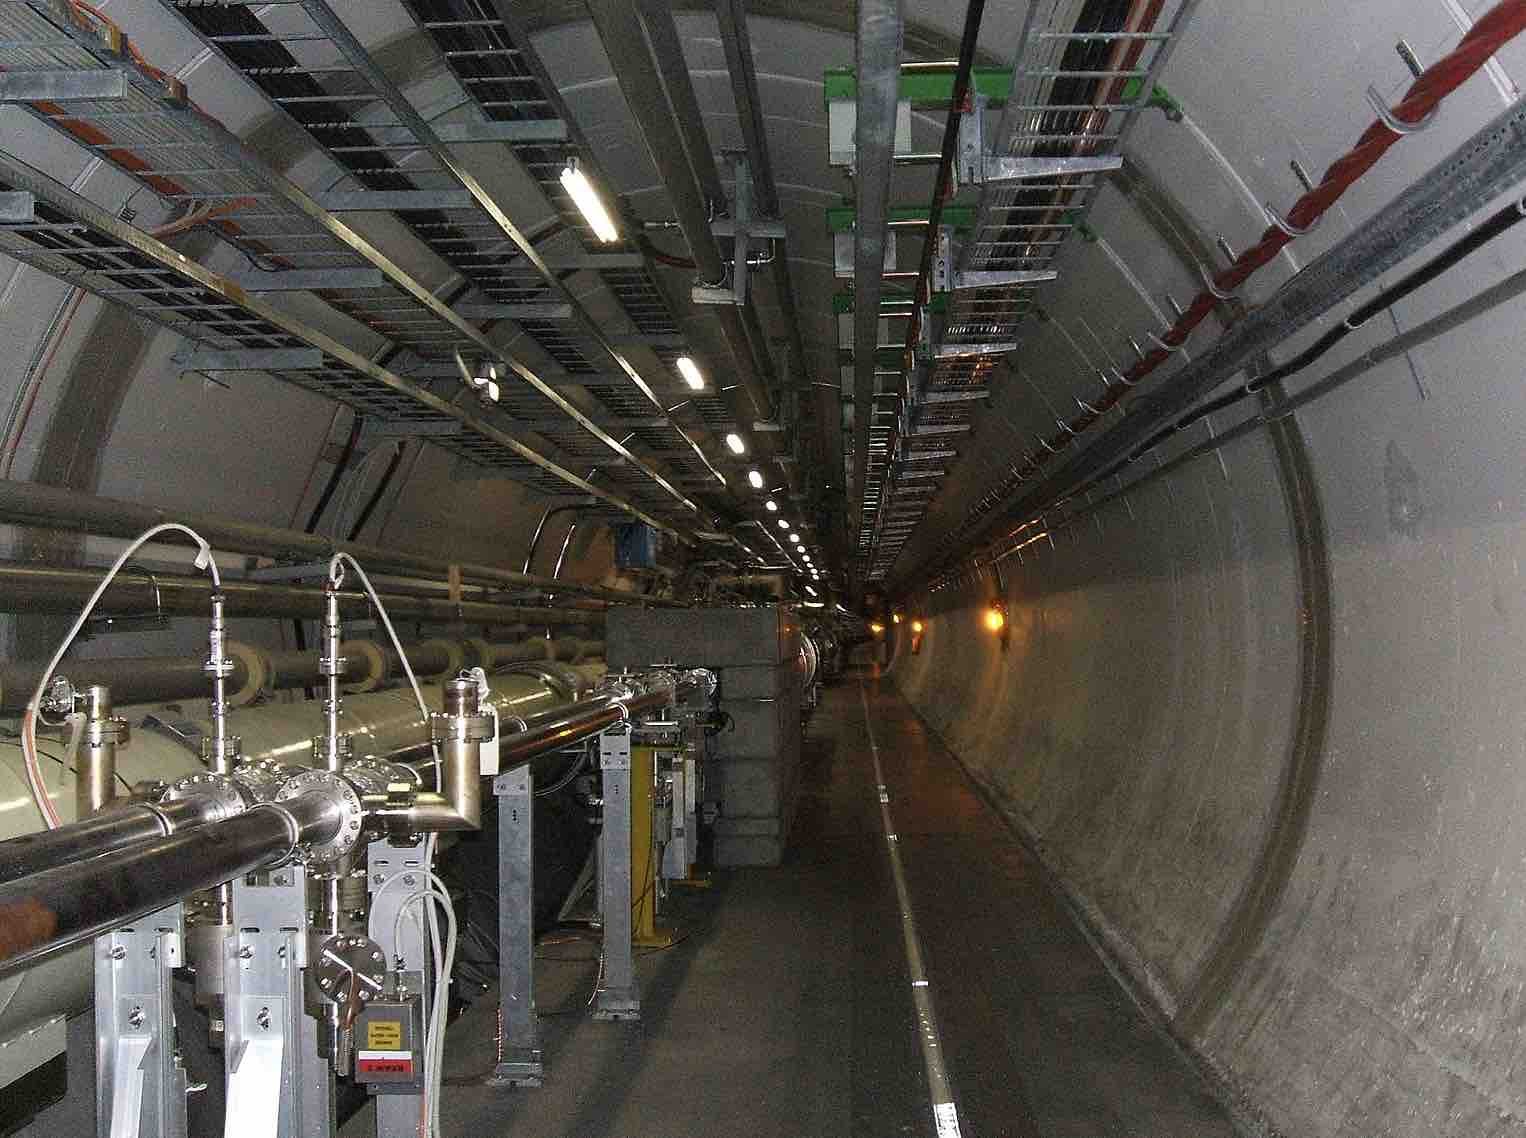 LHC